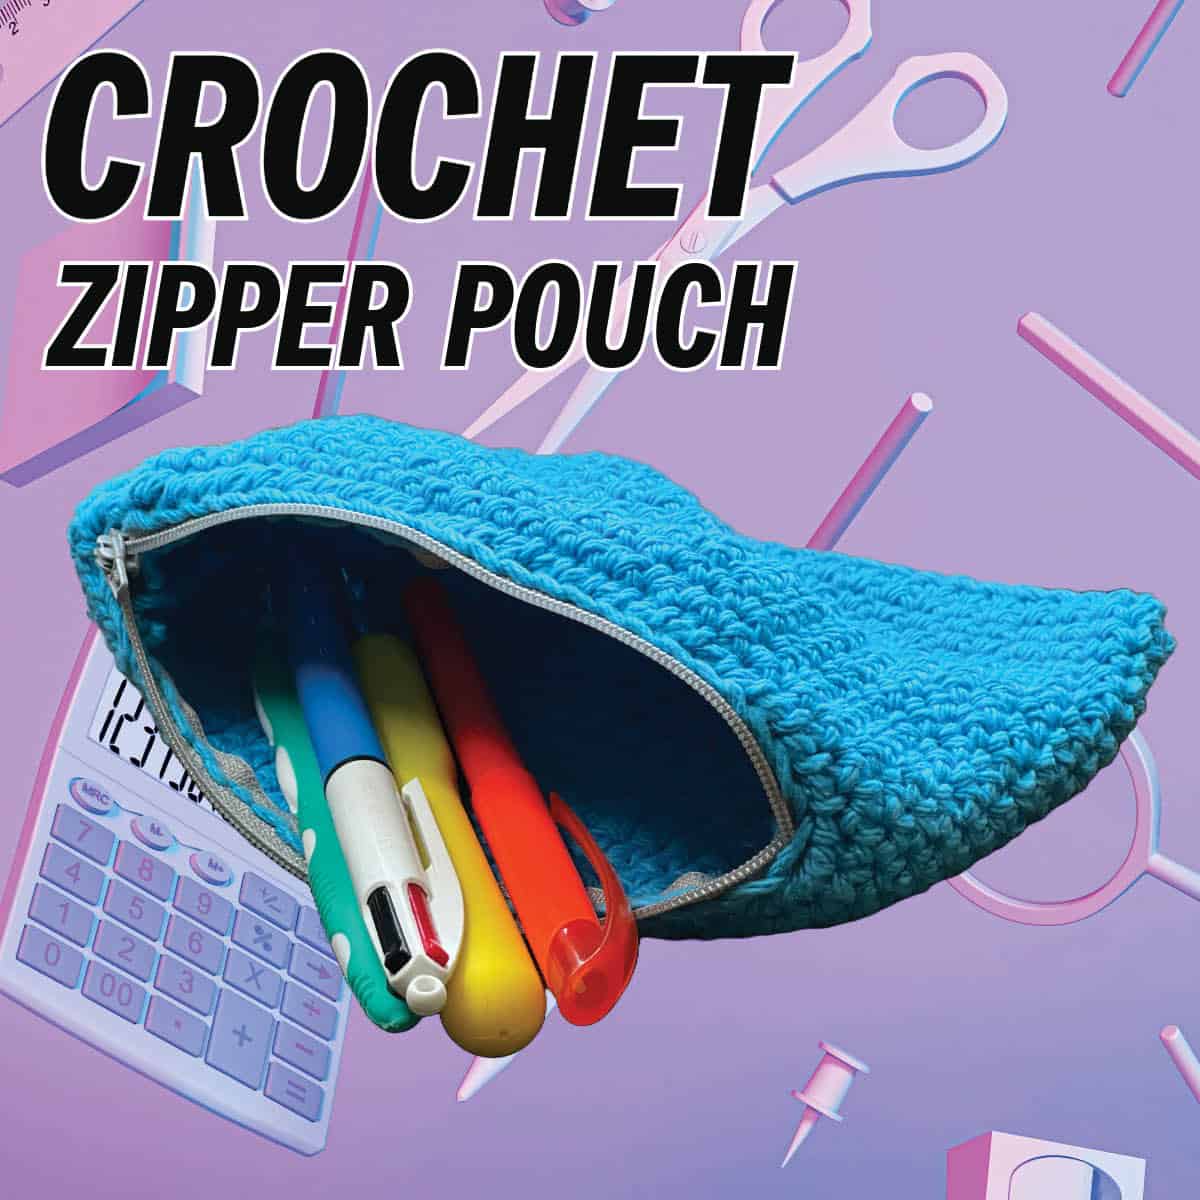 Crochet Zipper Pouch for Website Pattern